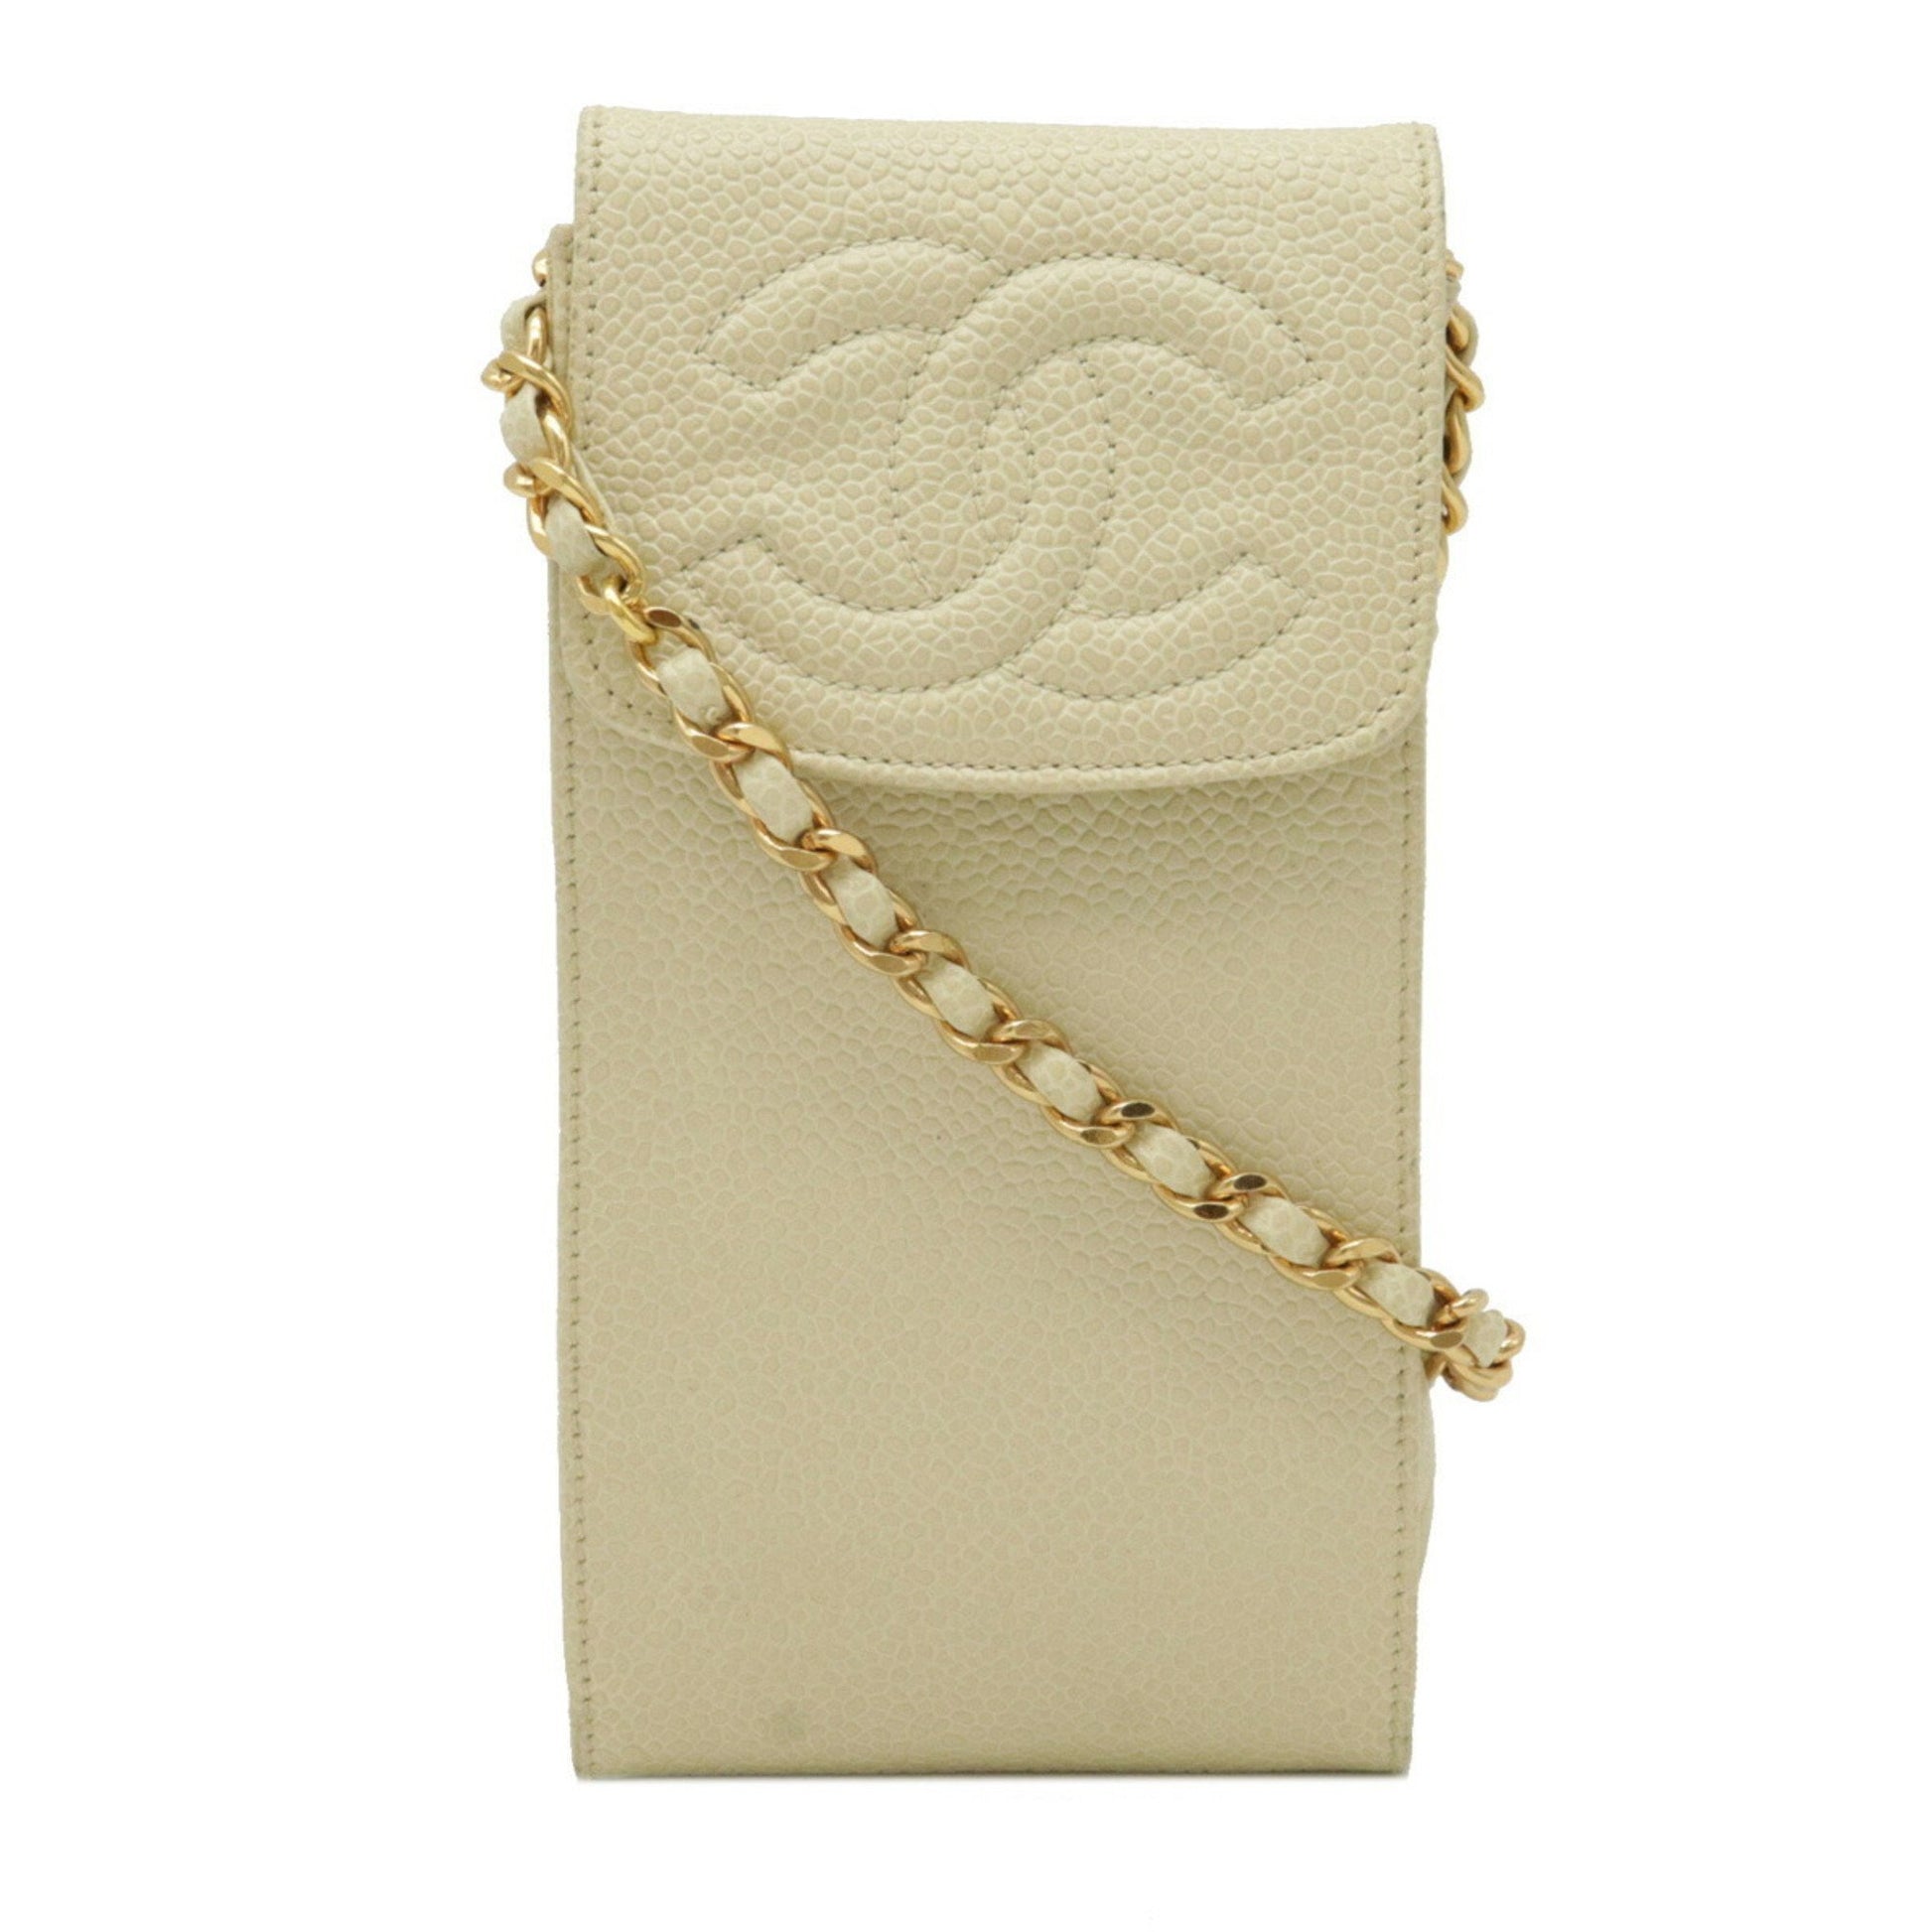 Chanel here mark chain pochette shoulder bag smartphone case mobile caviar  skin leather beige